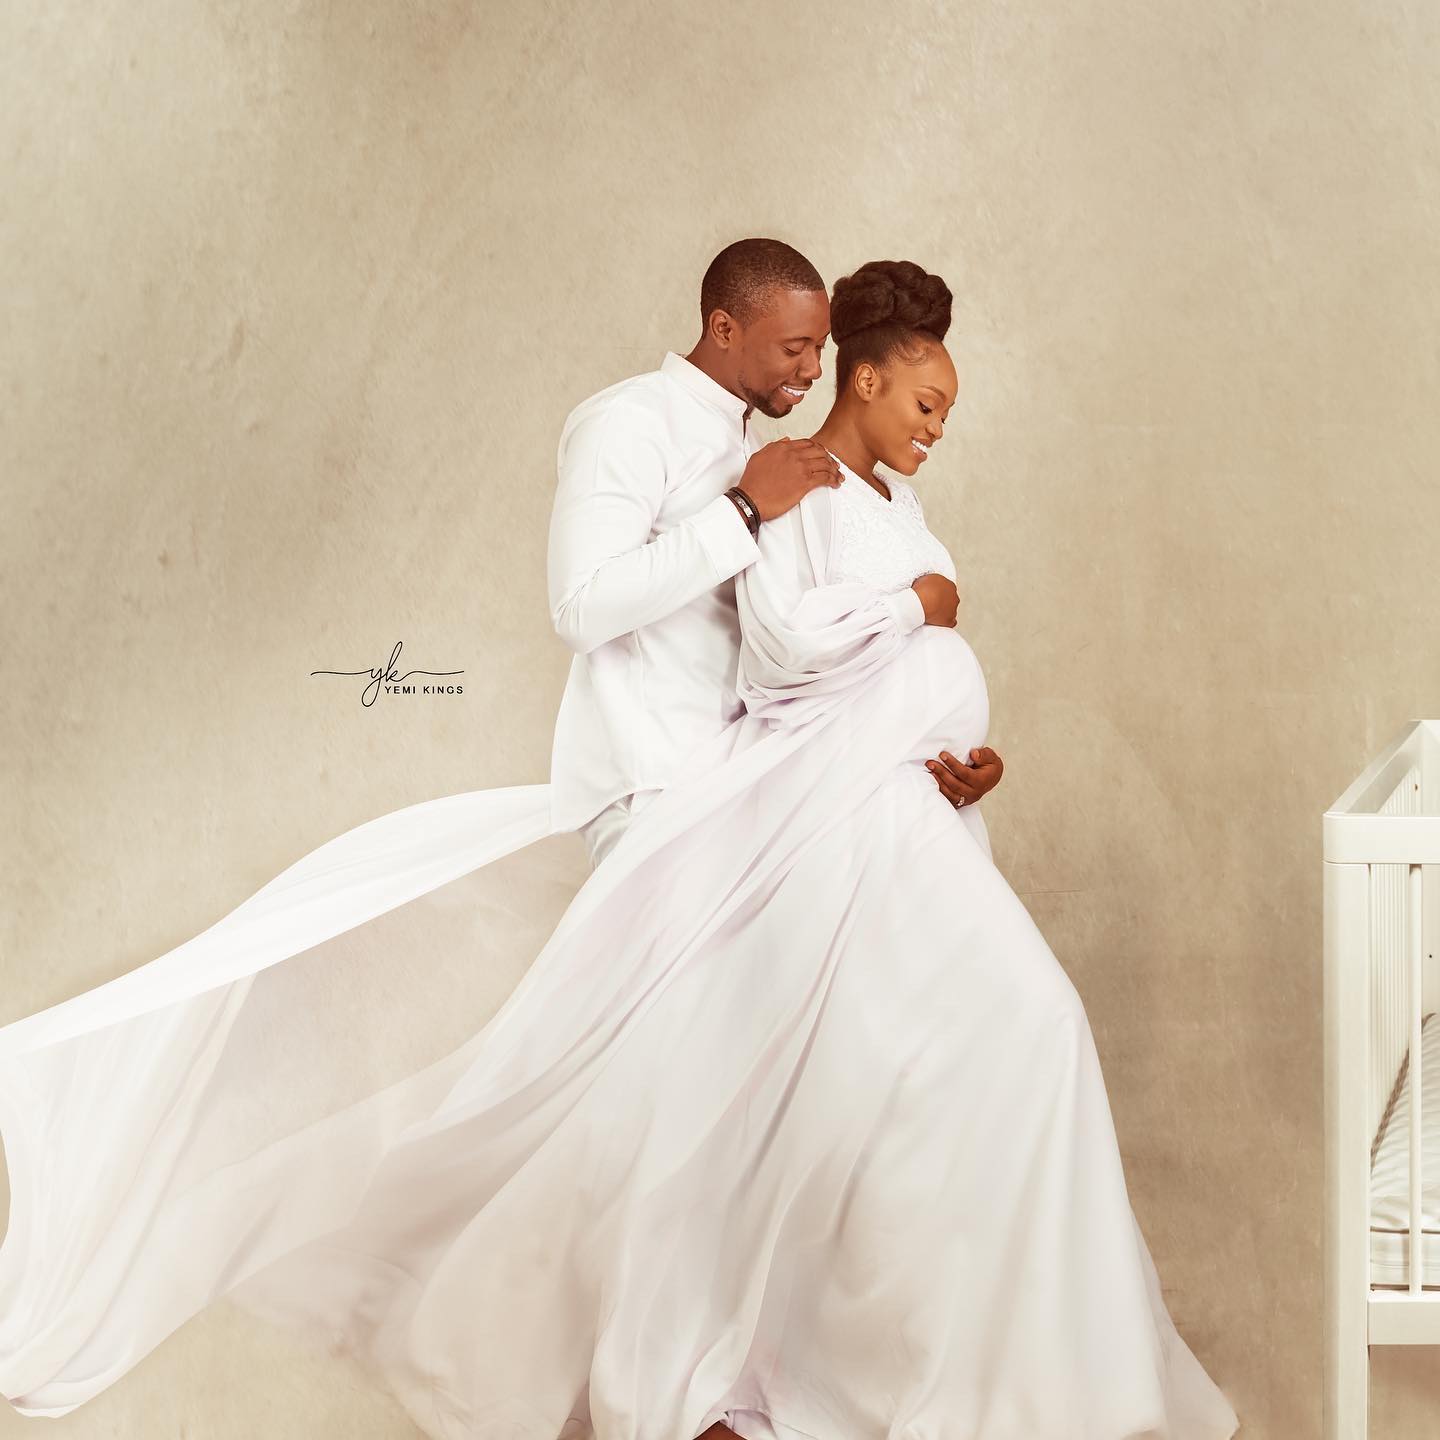 JayMikee & Wife, Tolu Bamiloye Welcome First Child